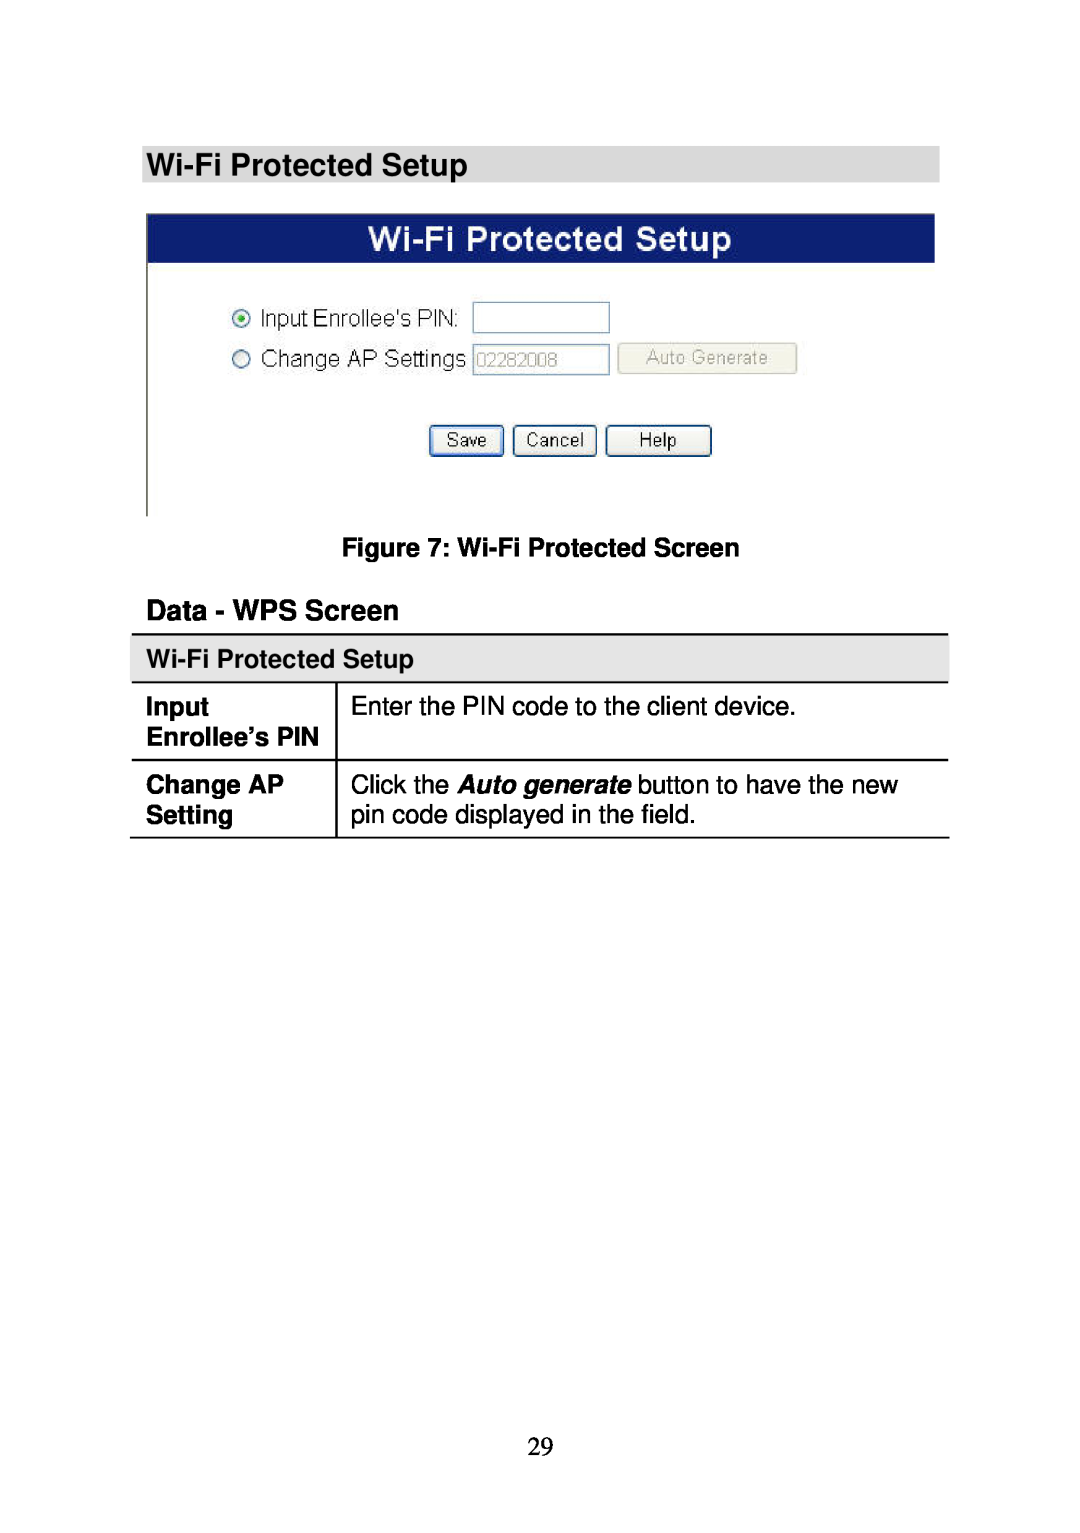 3Com WBR-6000 Wi-Fi Protected Setup, Data - WPS Screen, Wi-Fi Protected Screen, Input, Enrollee’s PIN, Change AP, Setting 